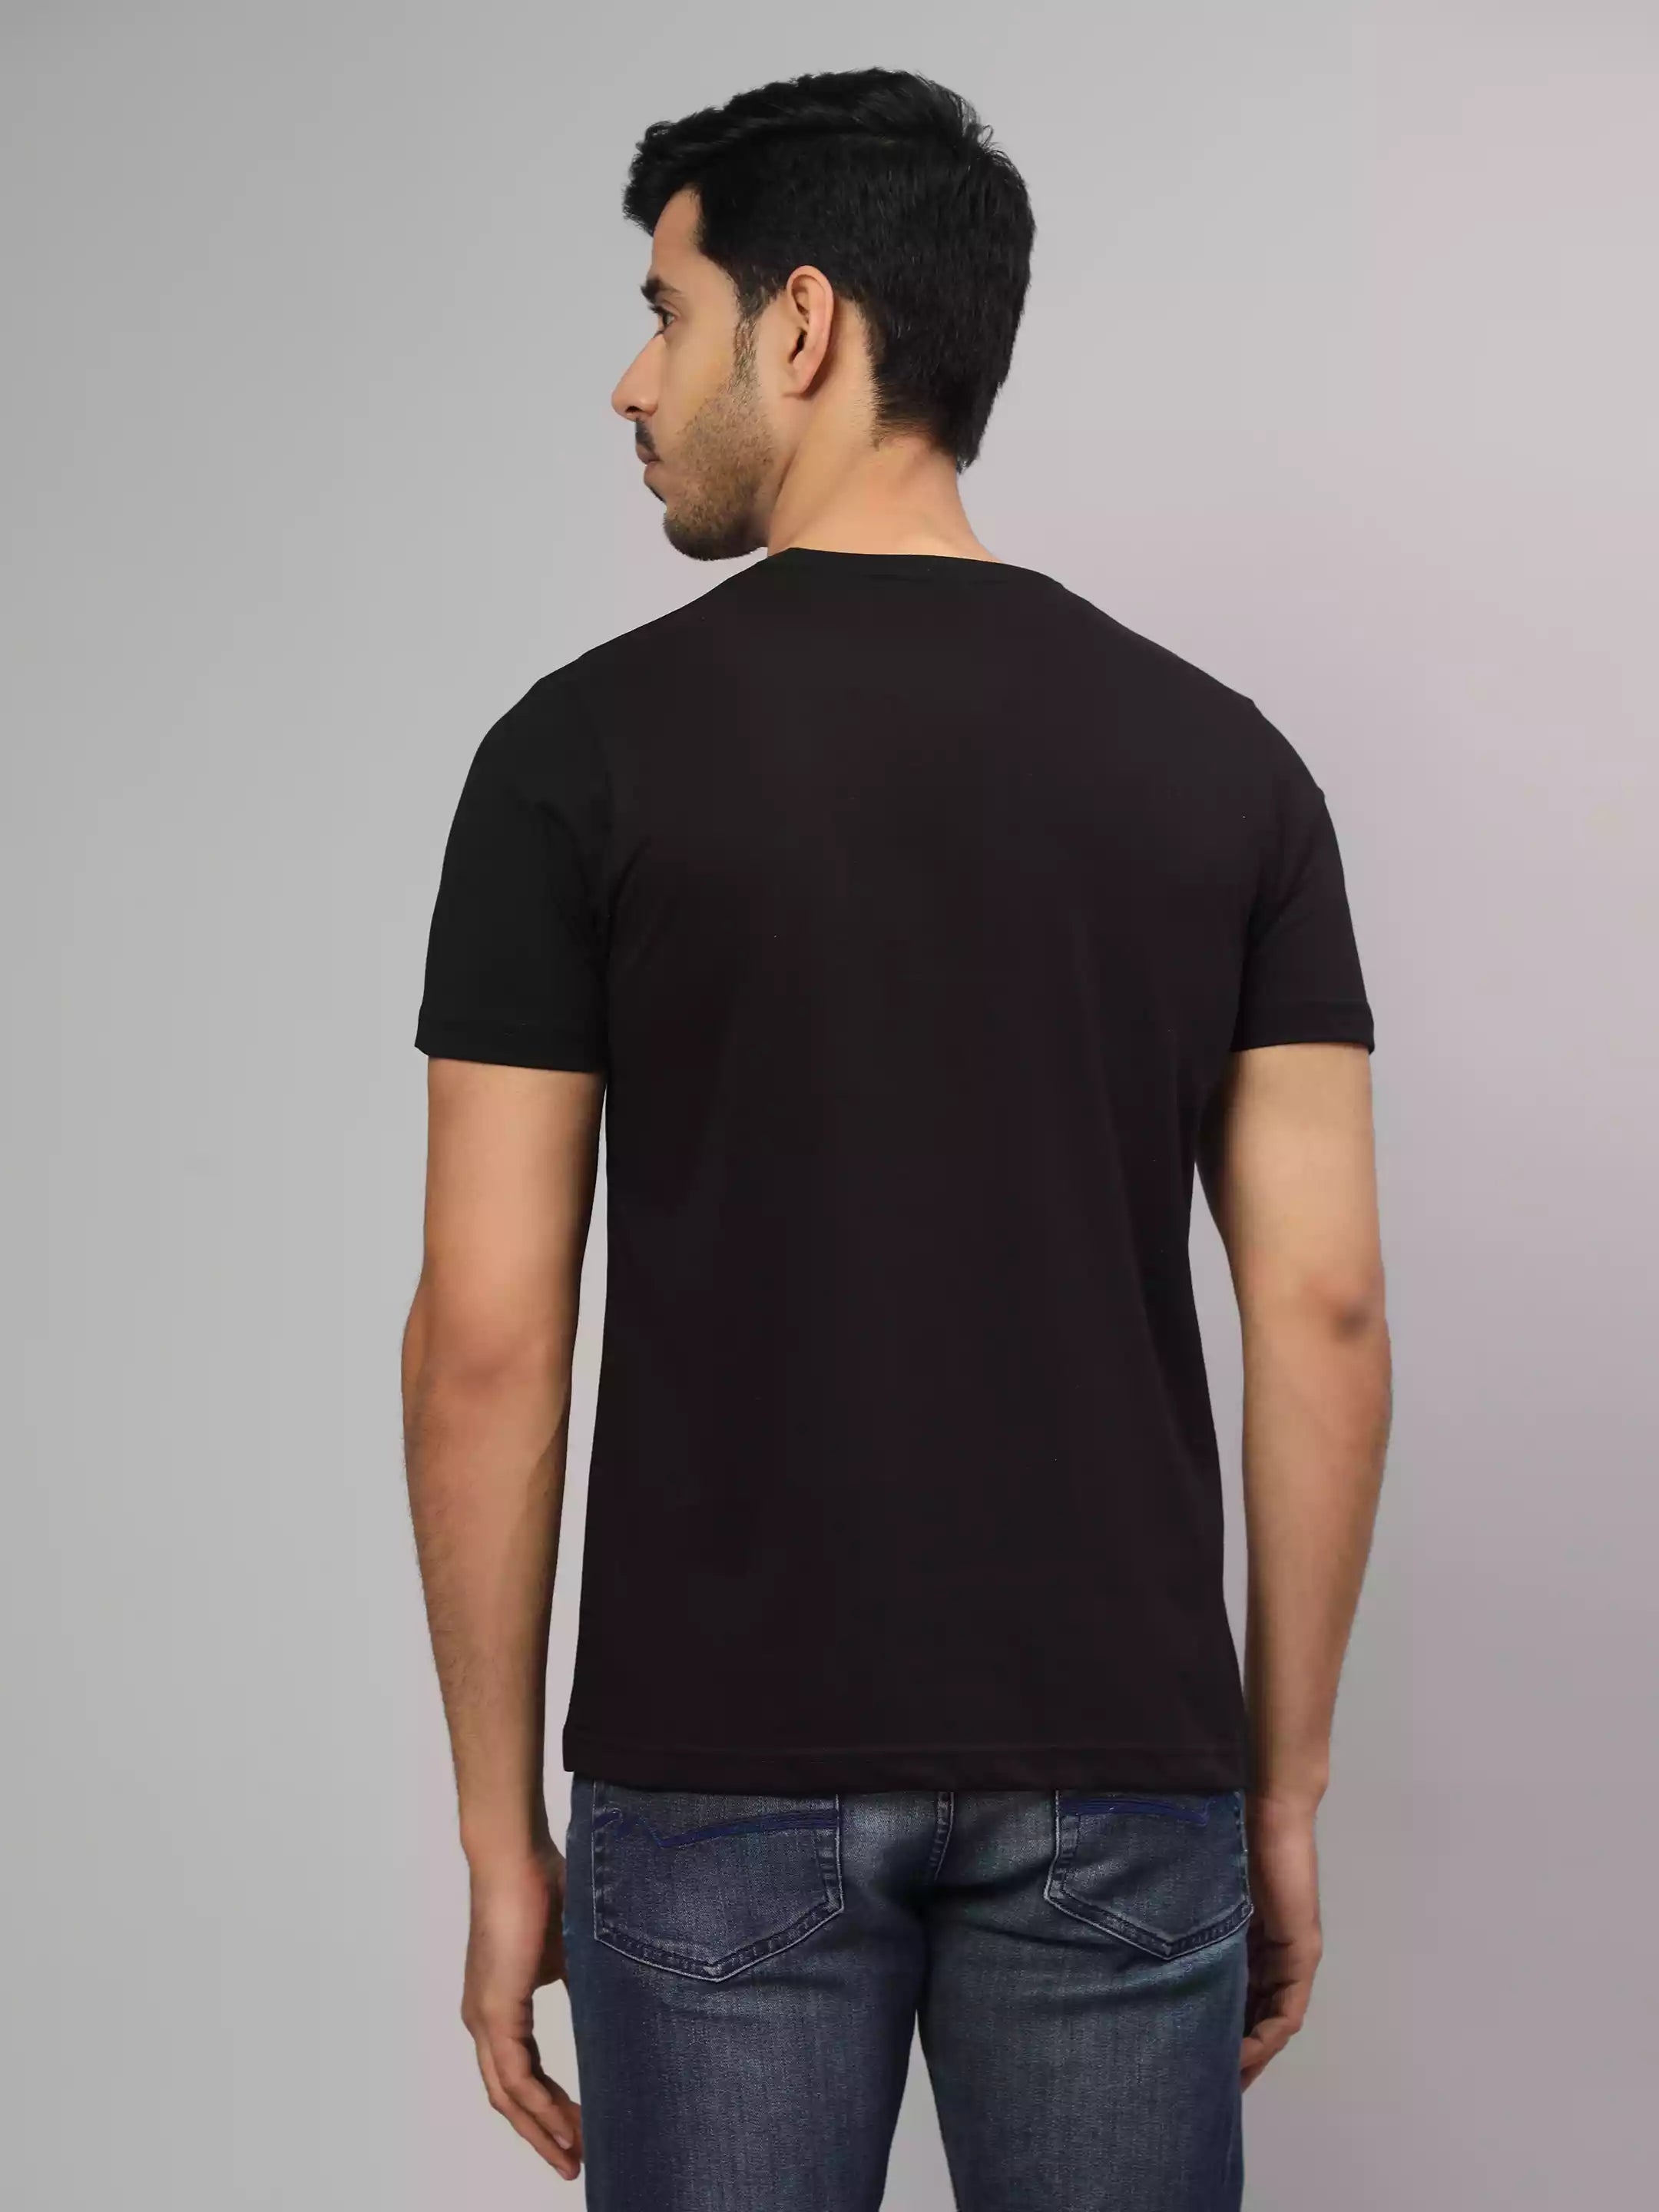 Aaivar Nirbhar - Sukhiaatma Unisex Marathi Graphic Printed Black T-shirt